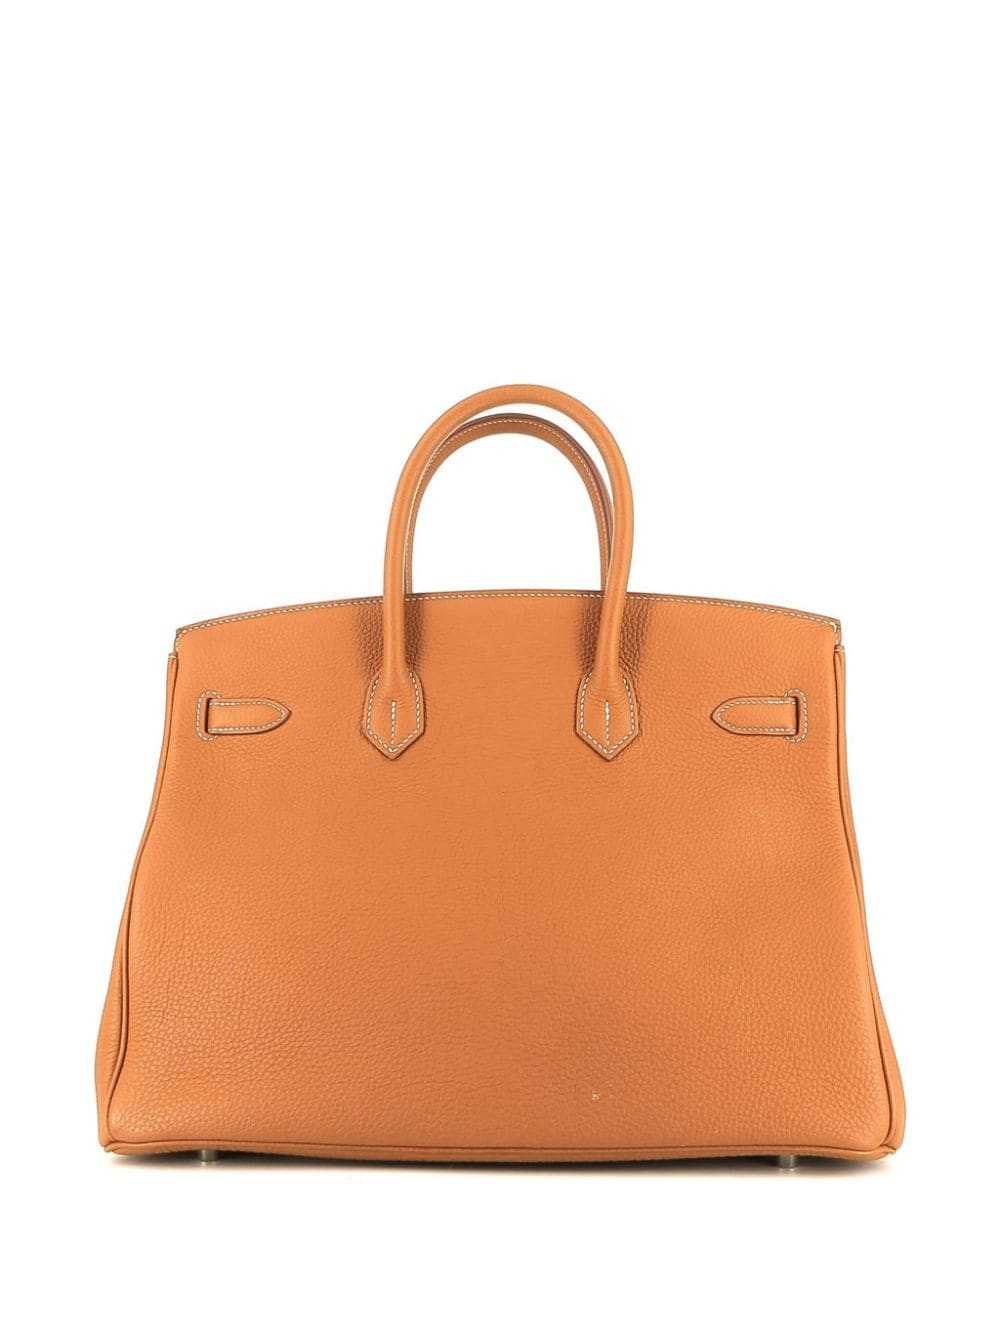 Hermès Pre-Owned 2017 Birkin 35 handbag - Orange - image 2